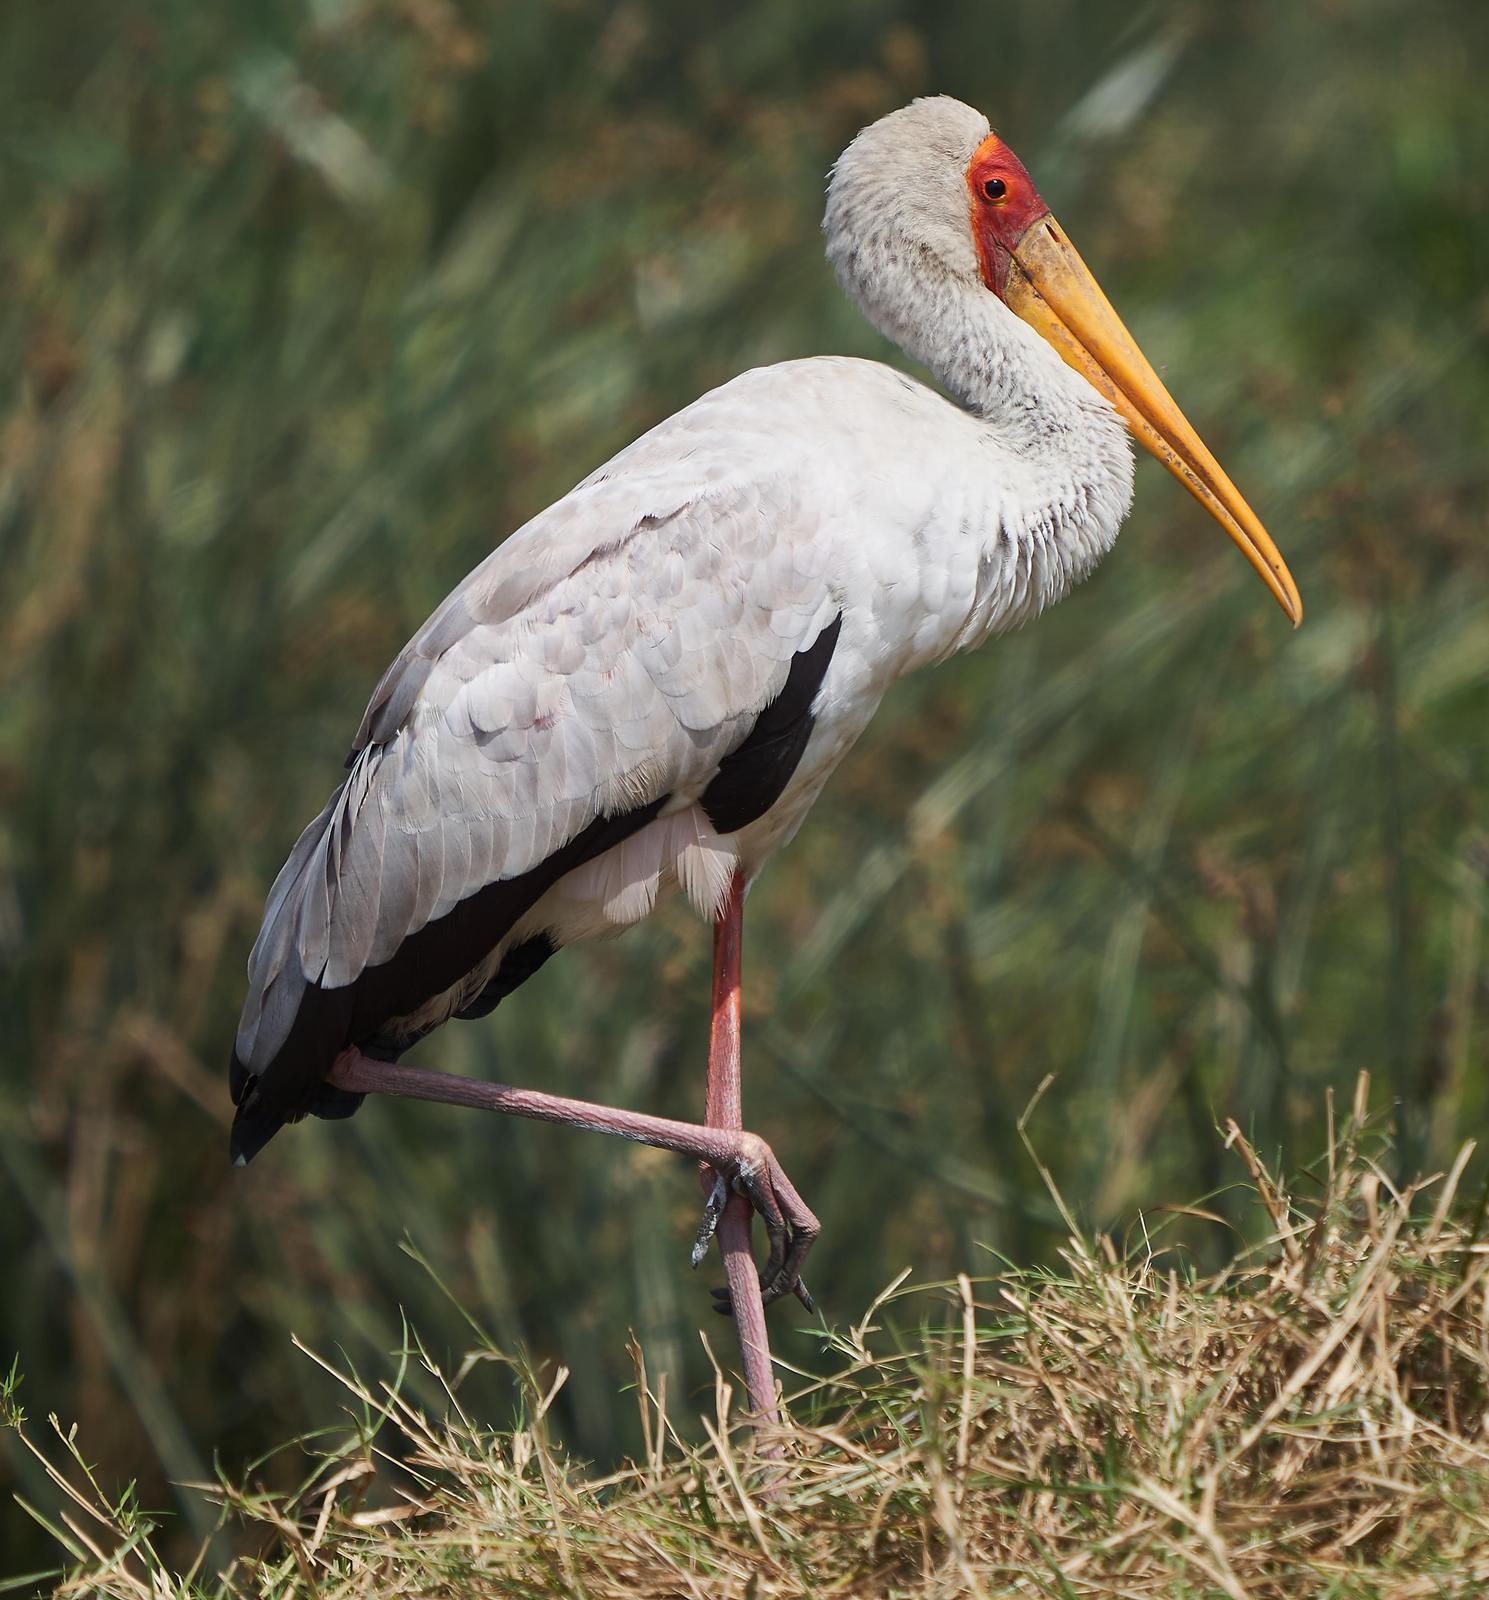 Yellow-billed Stork Photo by Steven Cheong